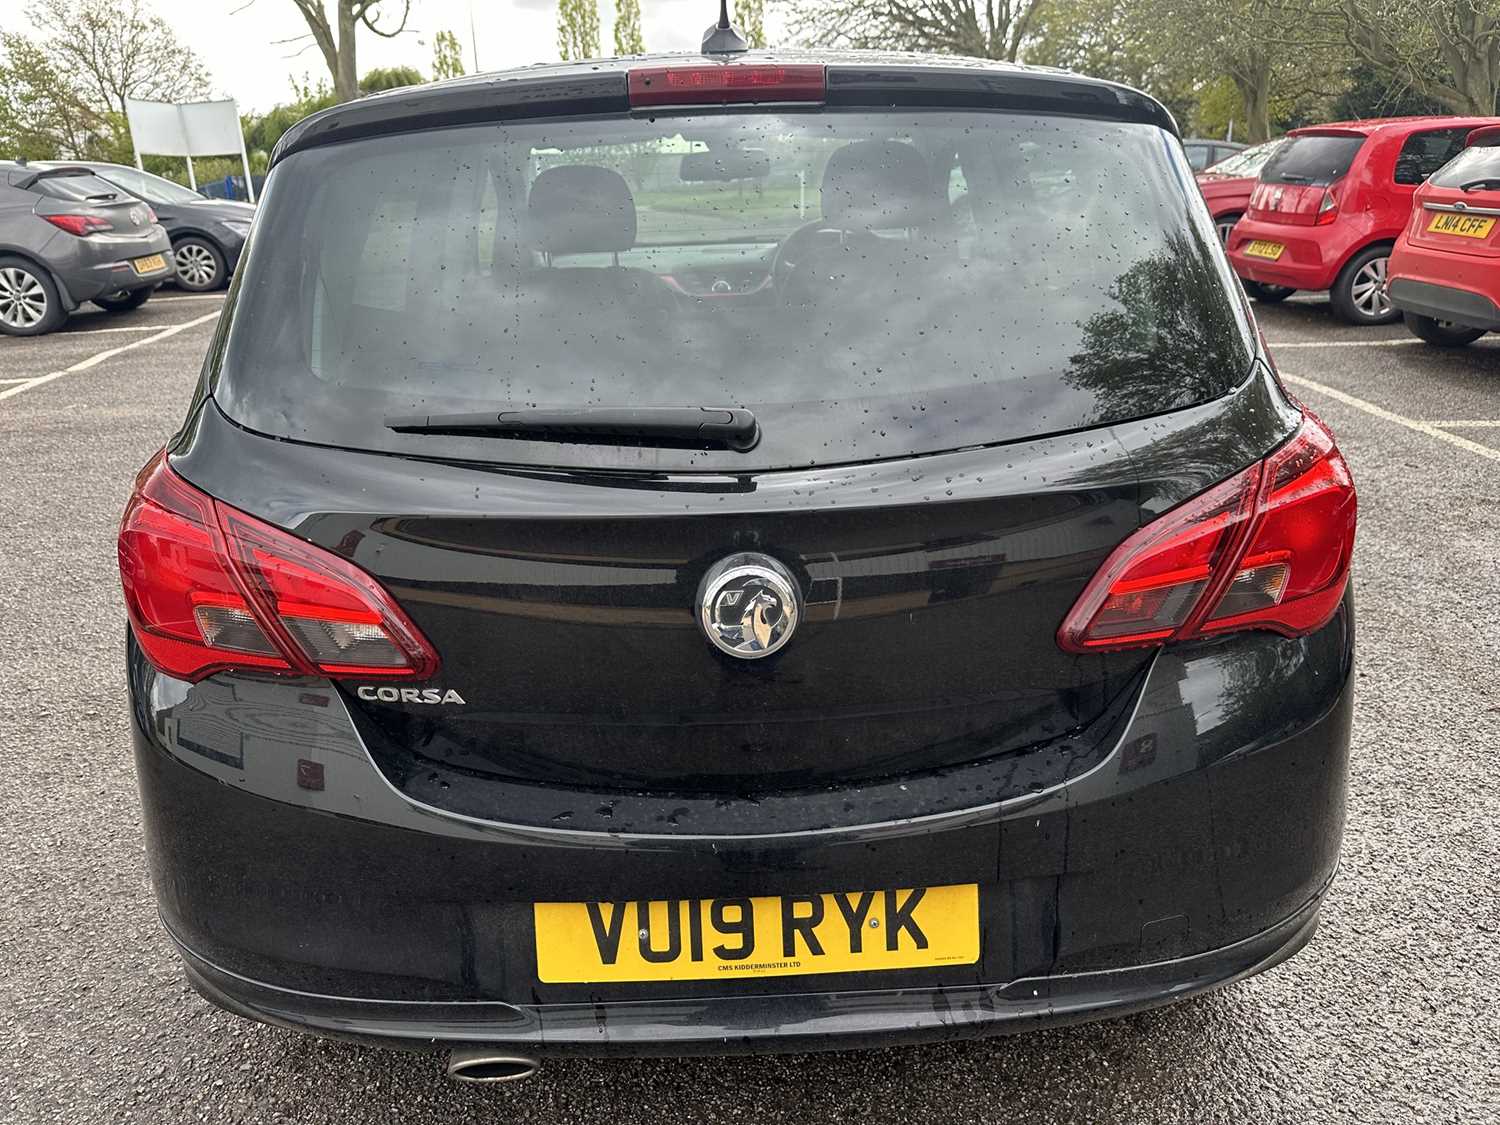 2019 Vauxhall Corsa SRI VX - Line Nav Black, 5 door hatchback, manual, reg. no. VU19 RYK - Image 6 of 15